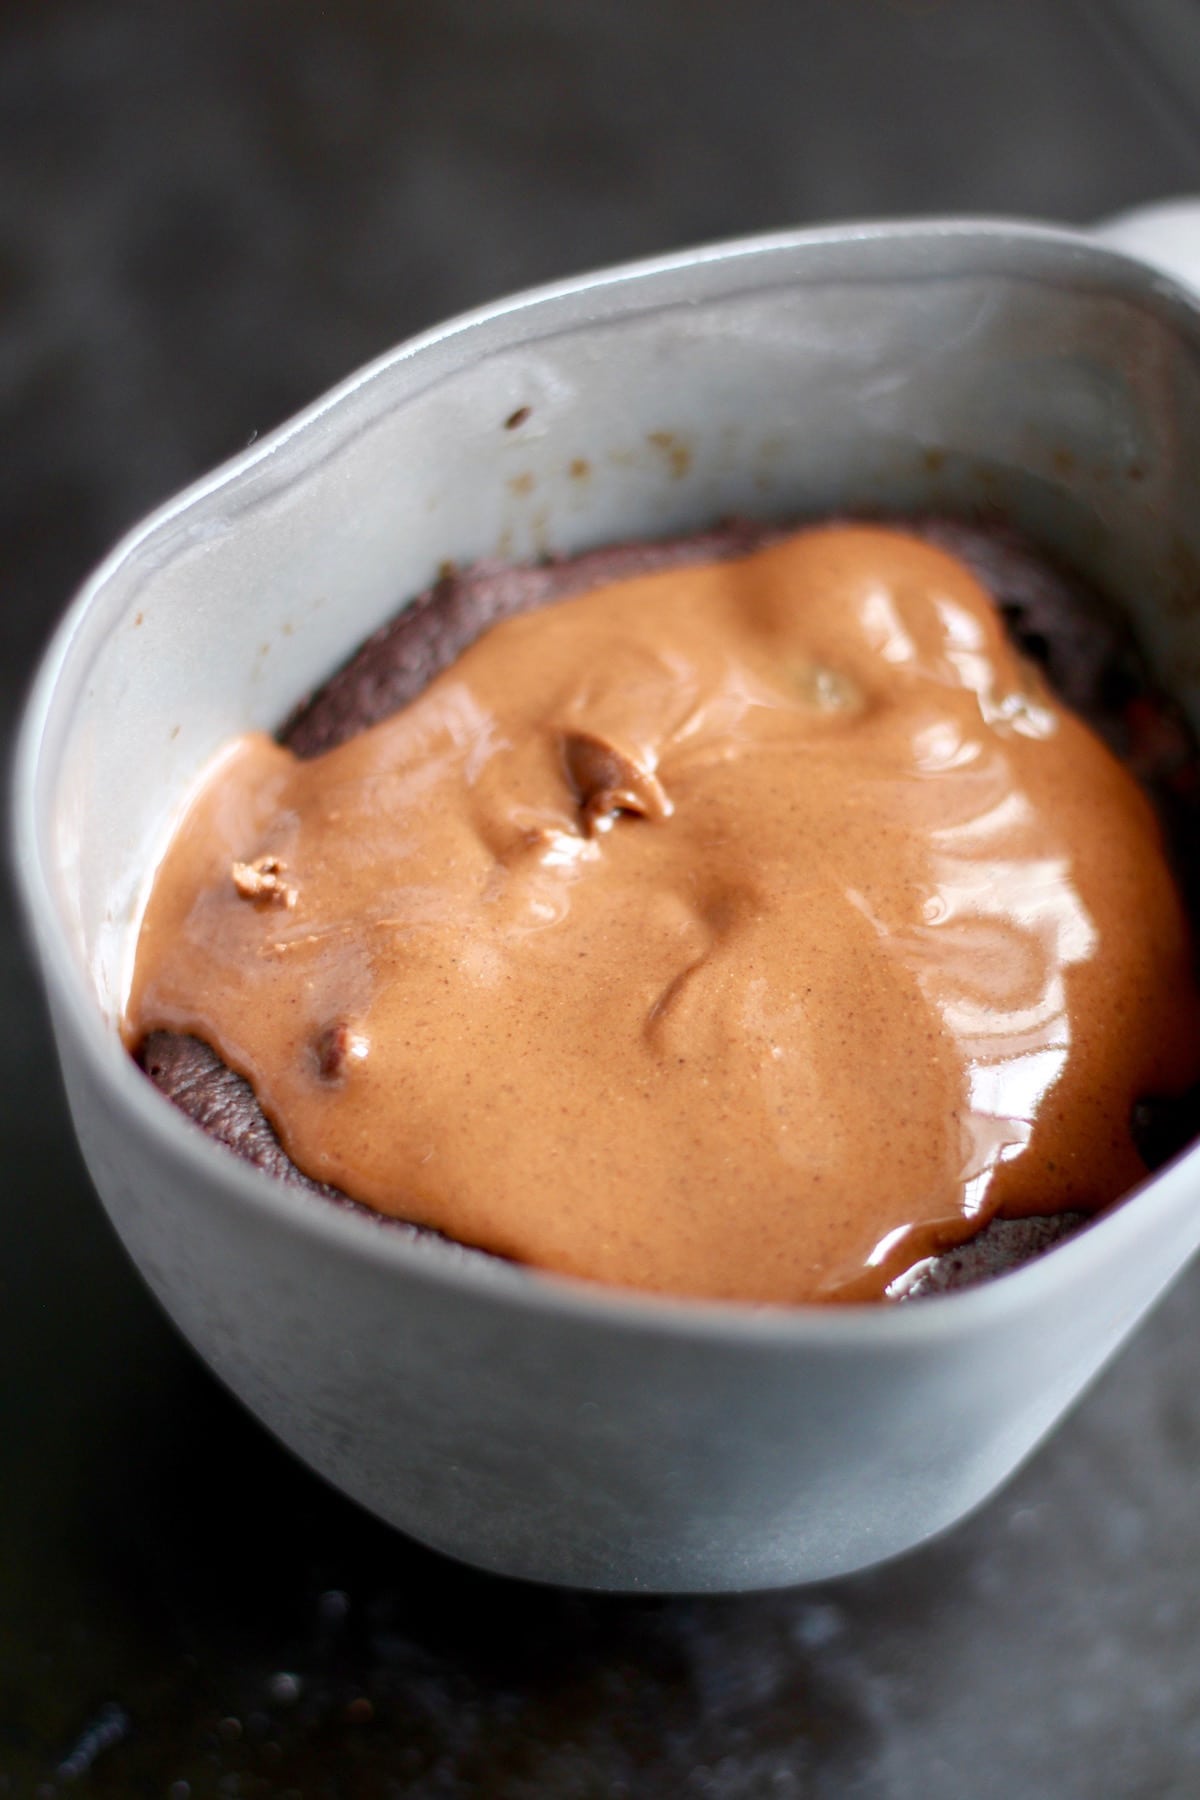 drippy peanut butter on a warm chocolate mug cake